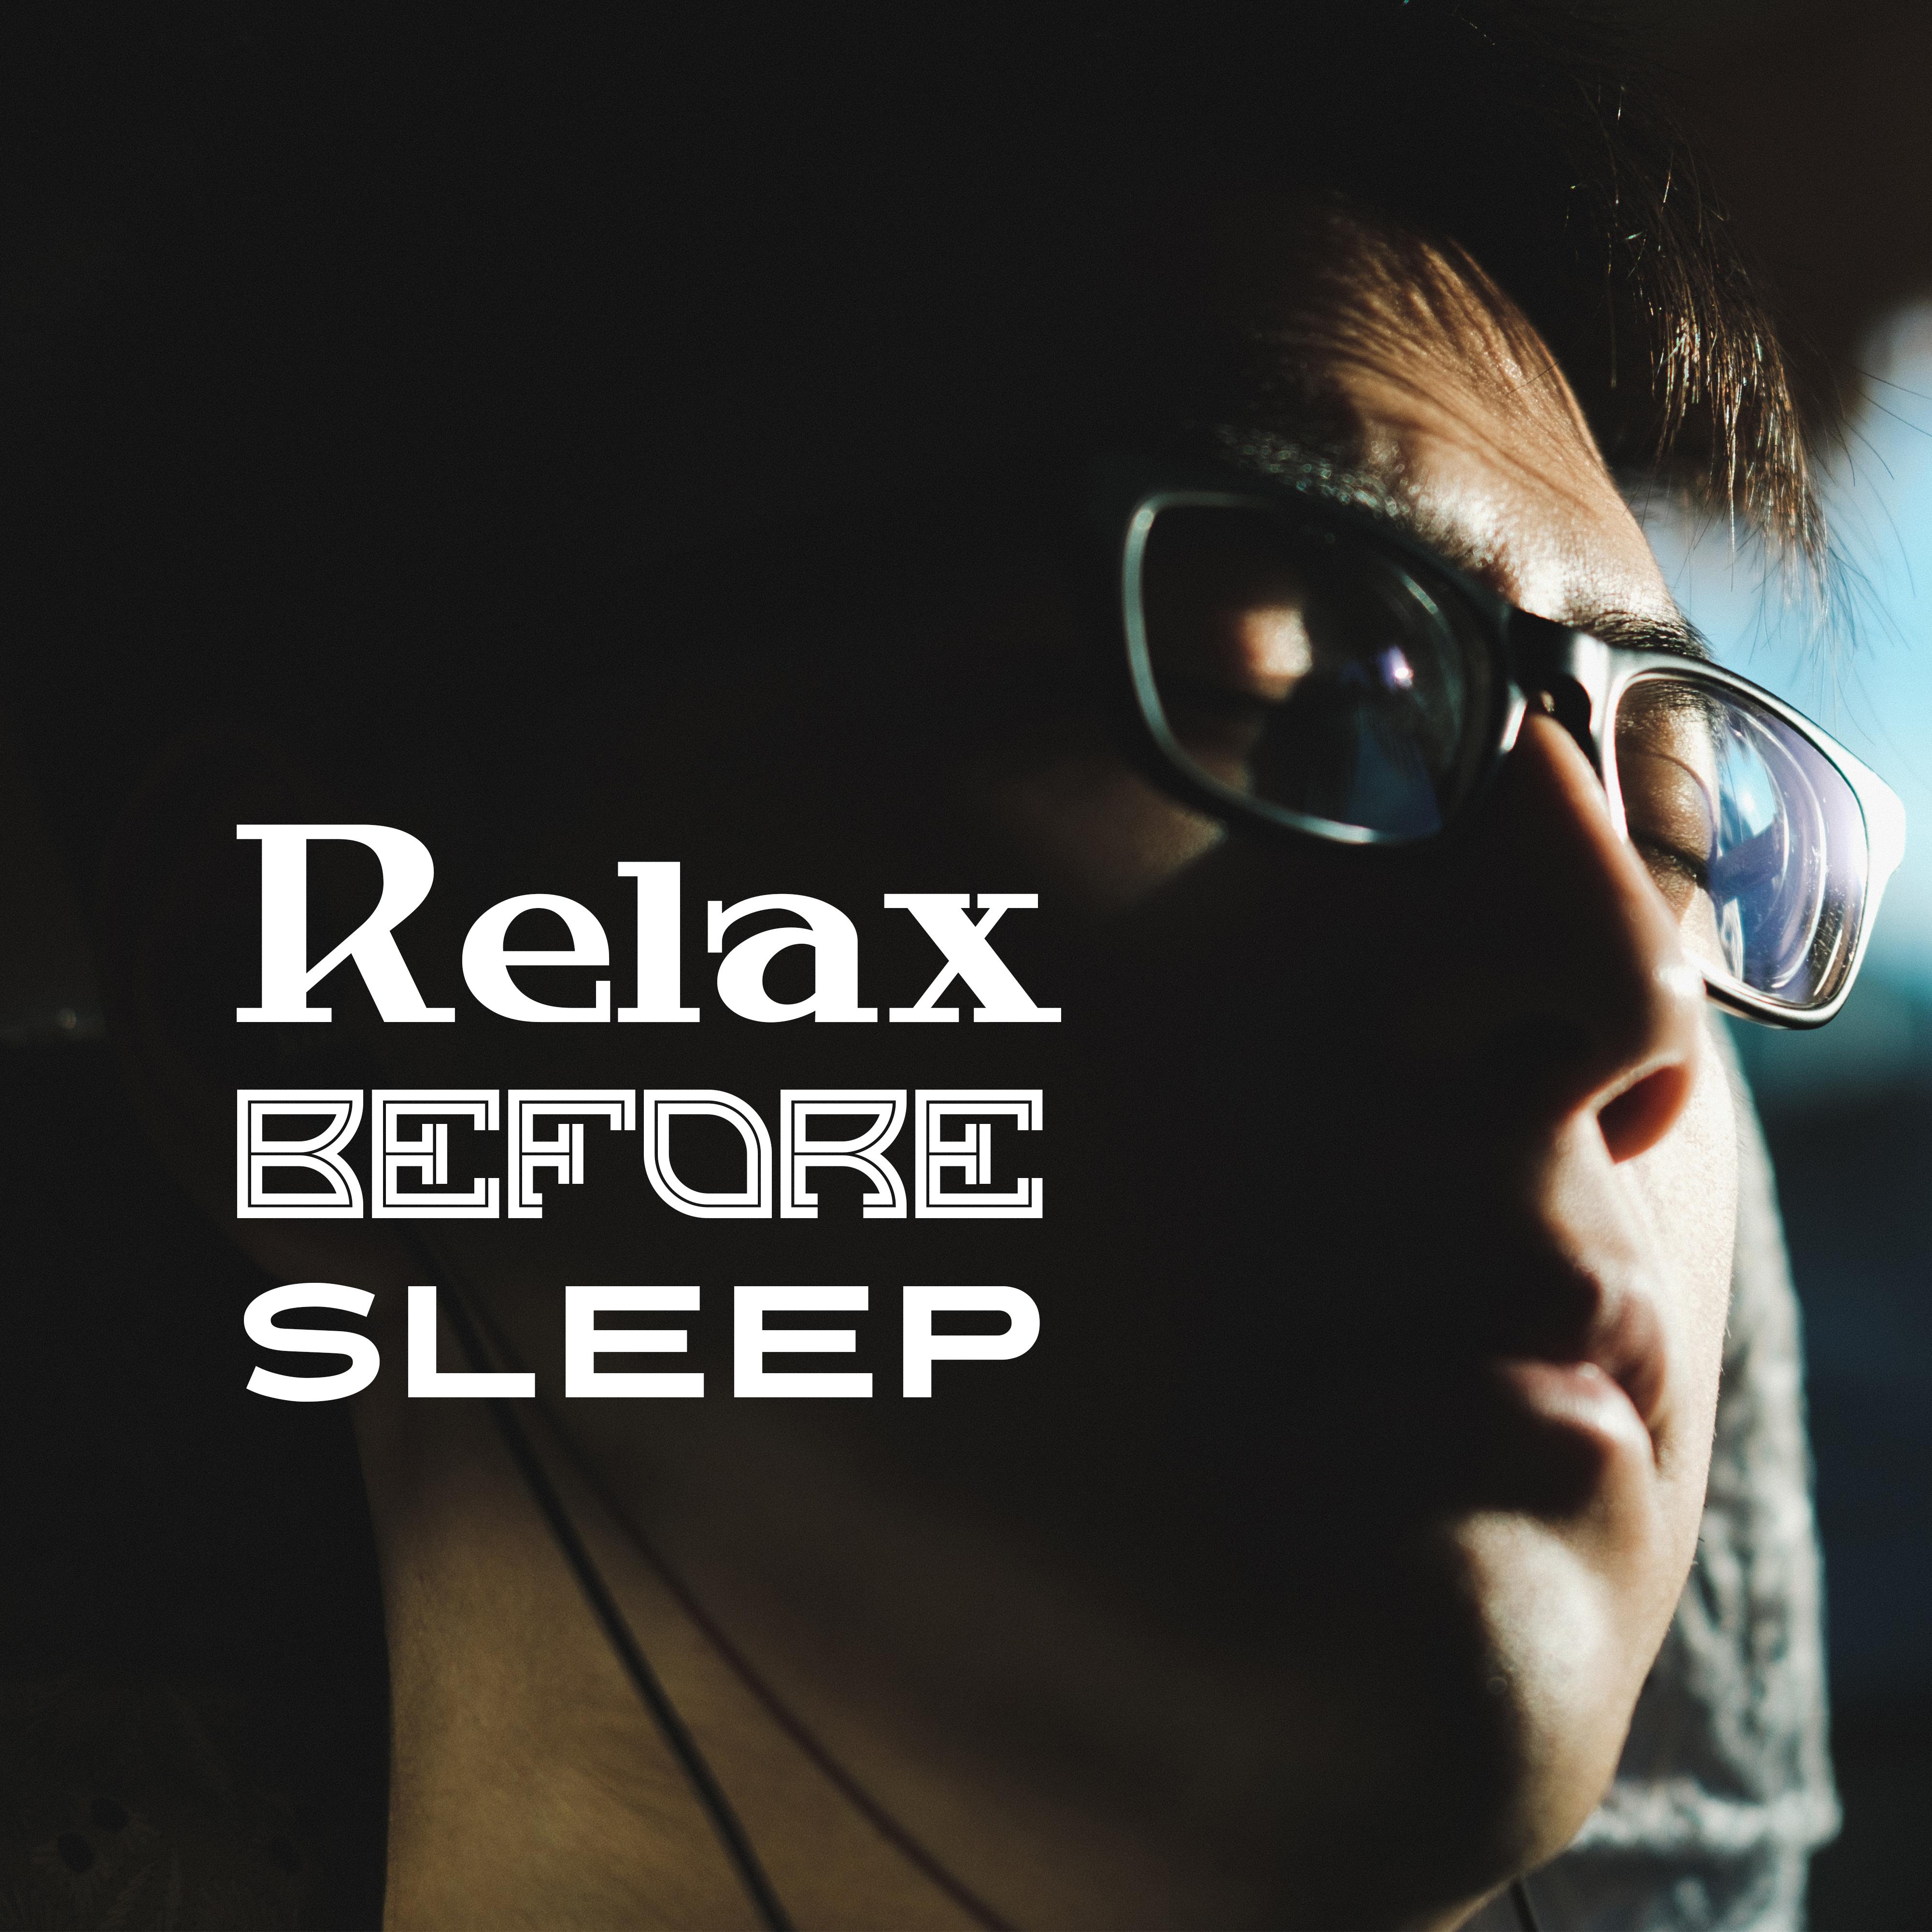 Relax Before Sleep